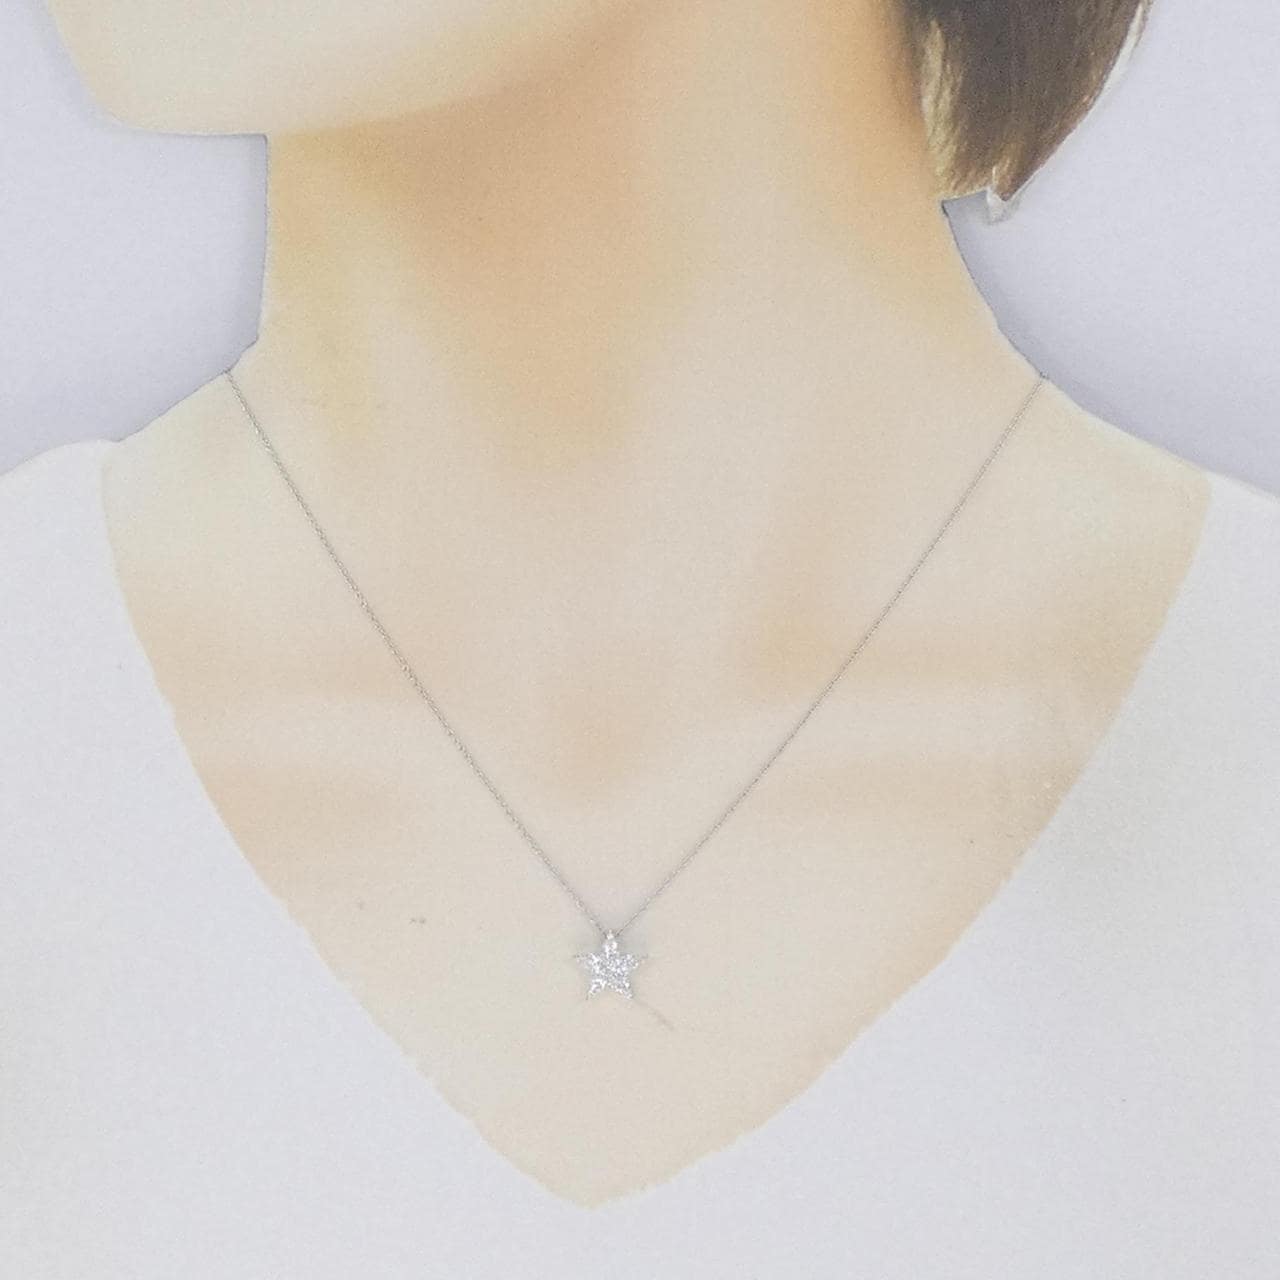 K18WG star Diamond necklace 0.32CT